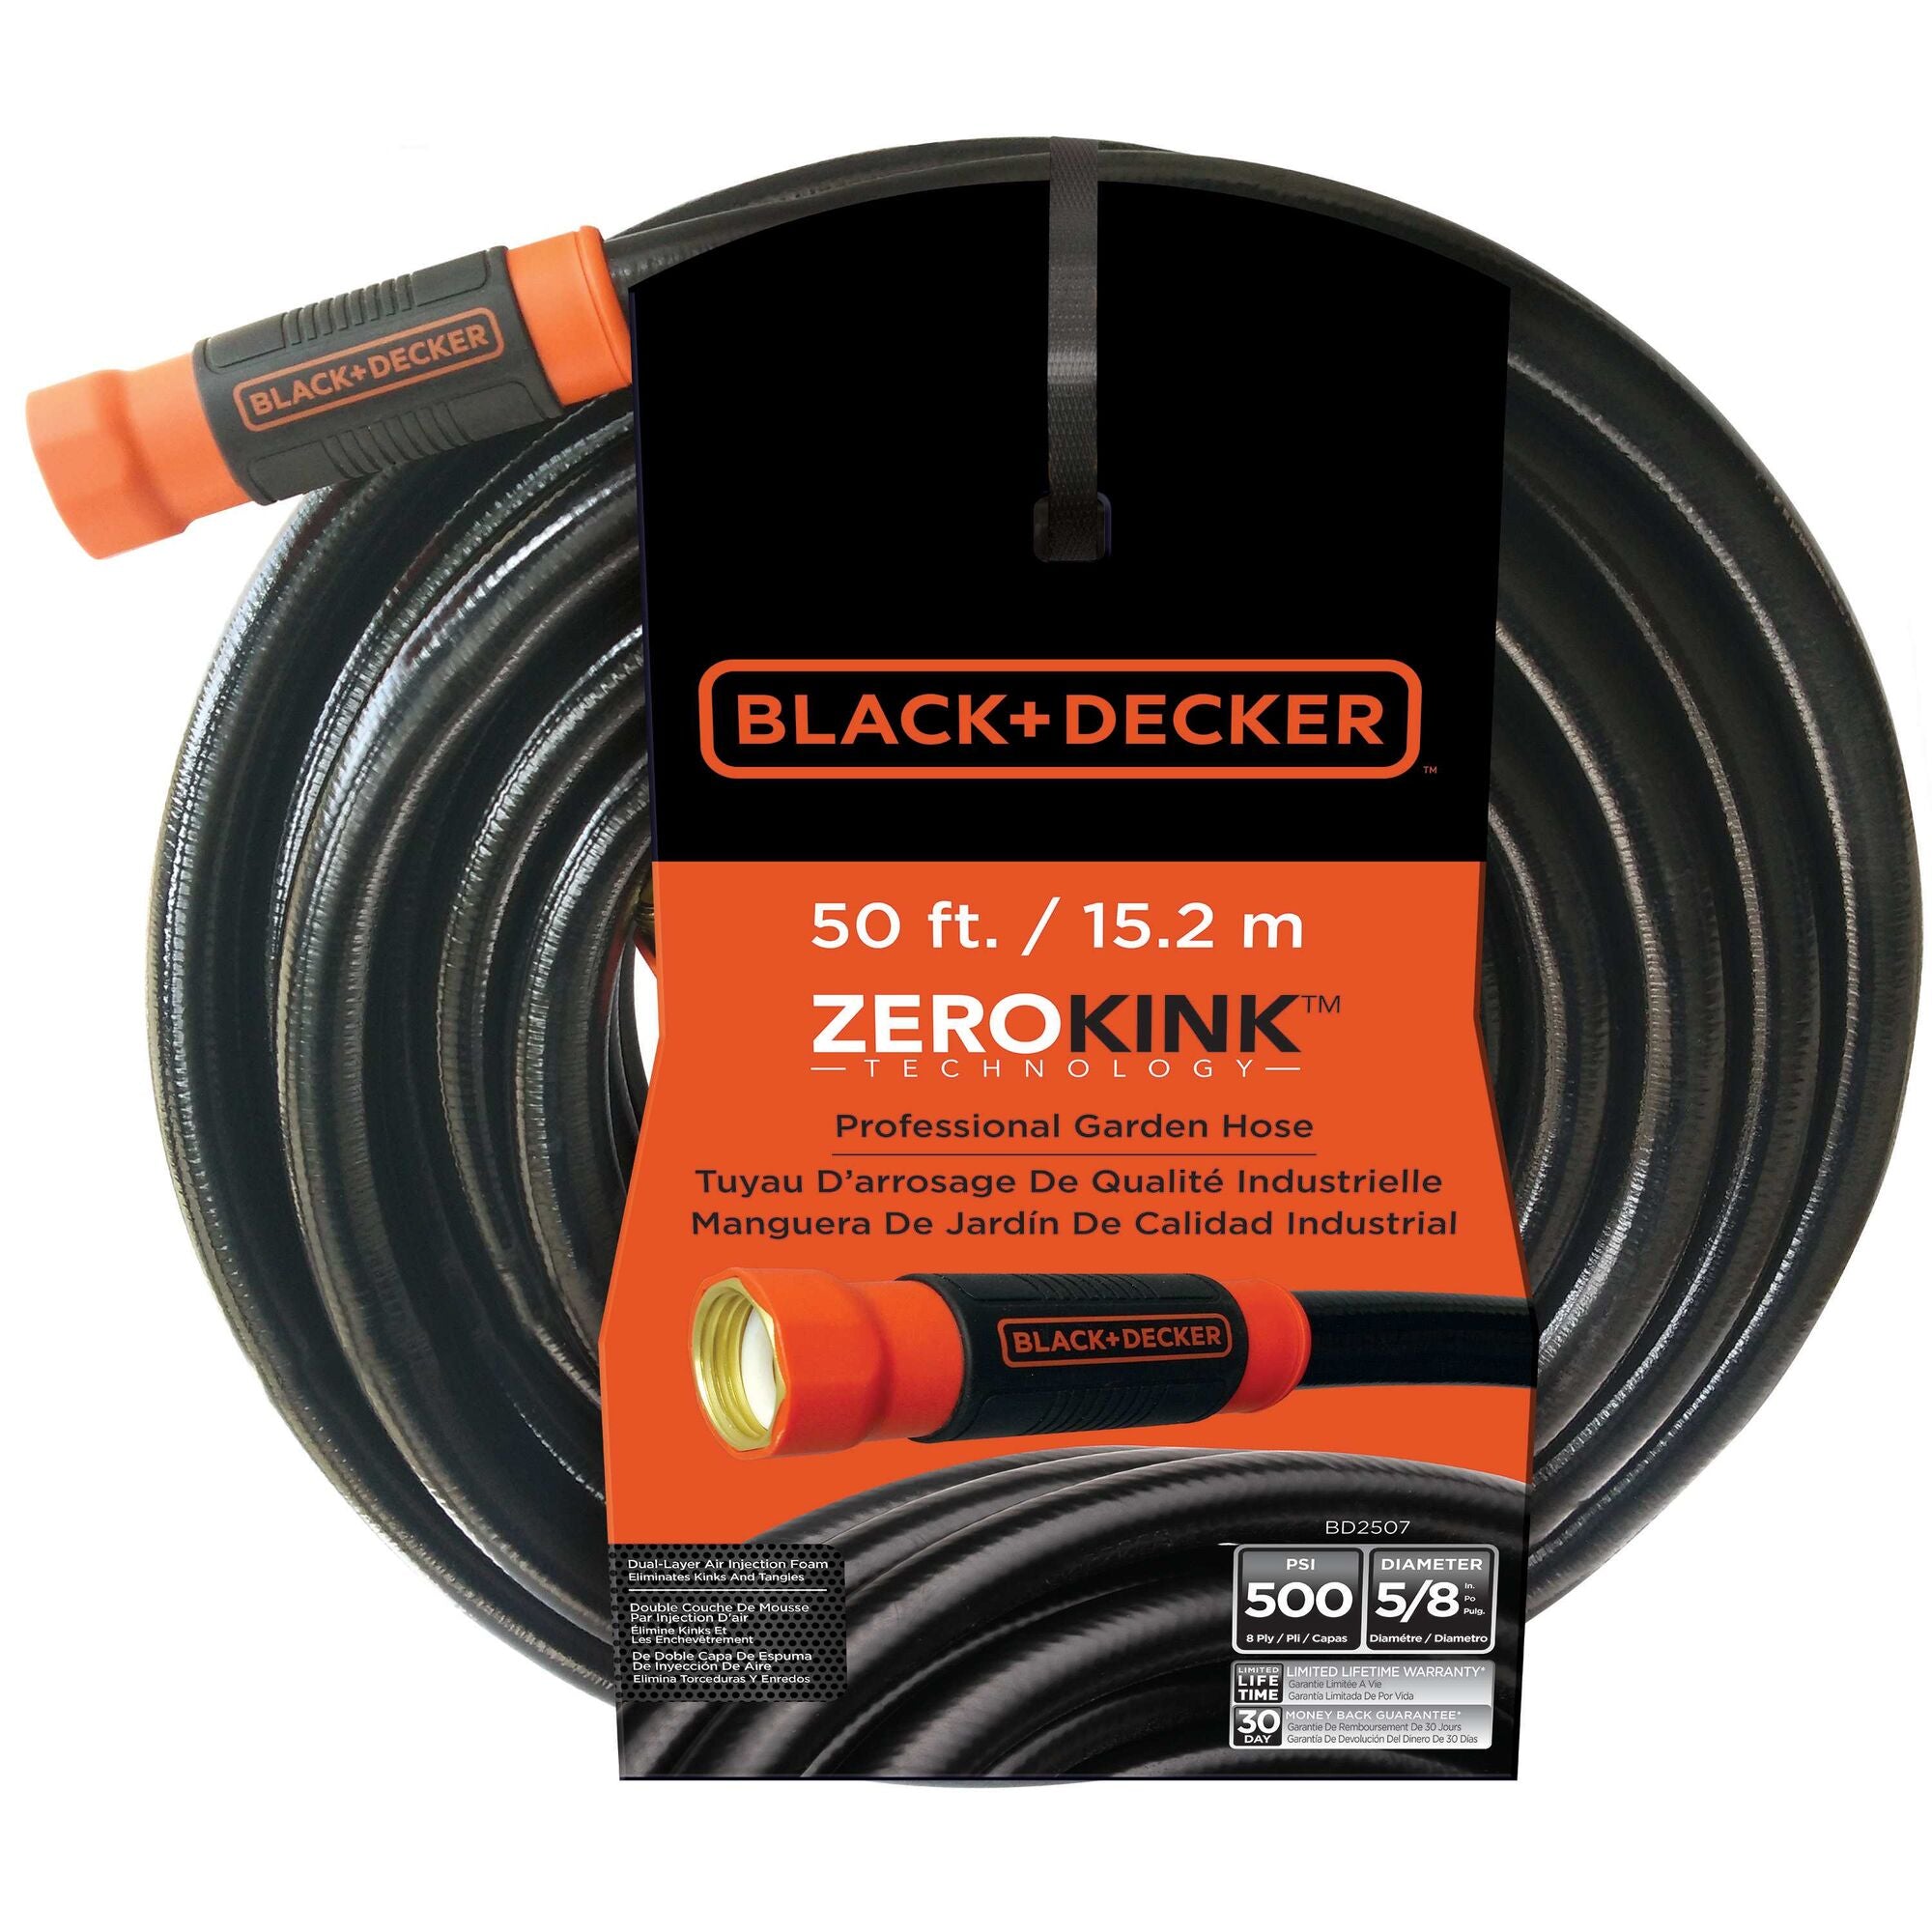 Black+decker 190657 4 gal. Black and Decker Battery Powered Backpack Sprayer